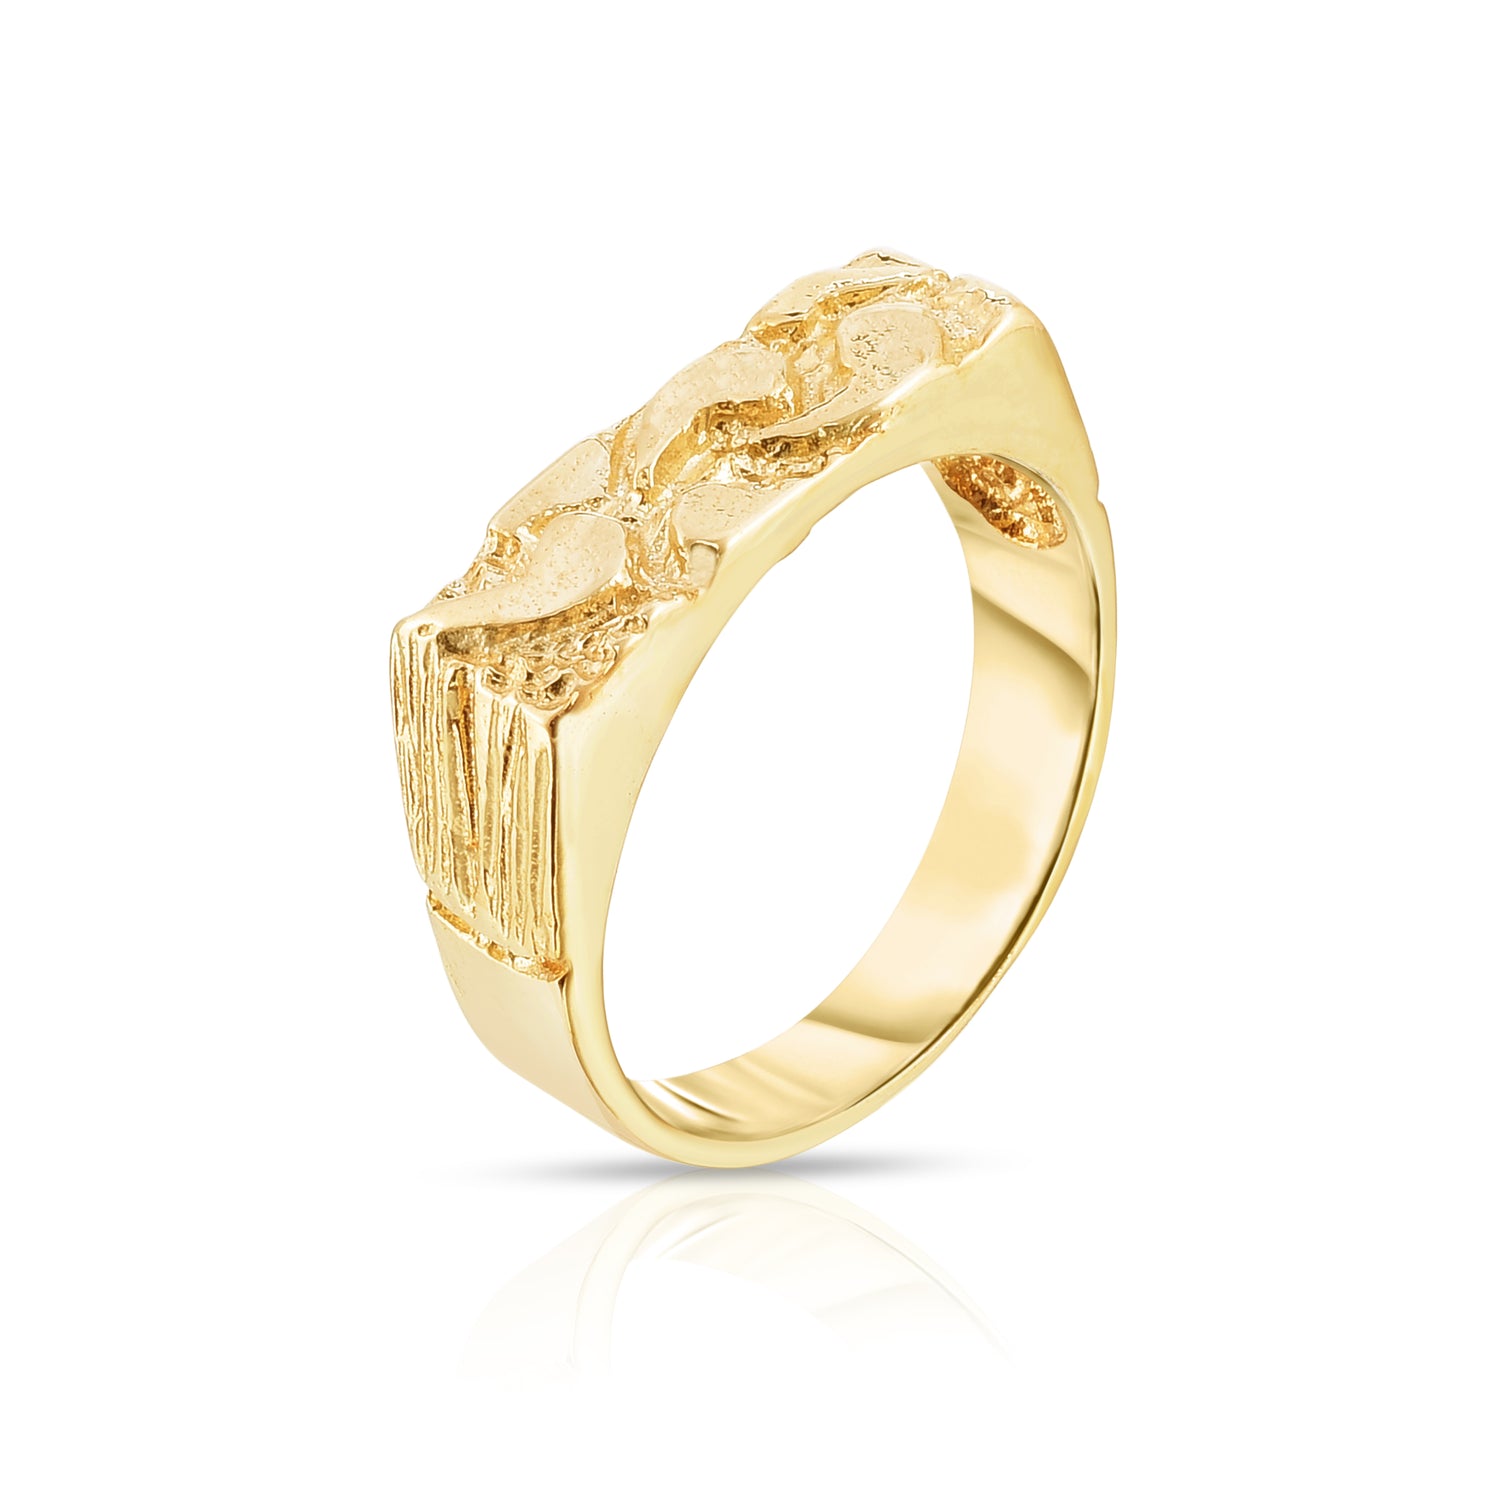 Floreo 10k Yellow Gold 6mm Narrow Rectangle Shape Dense Nugget Ring